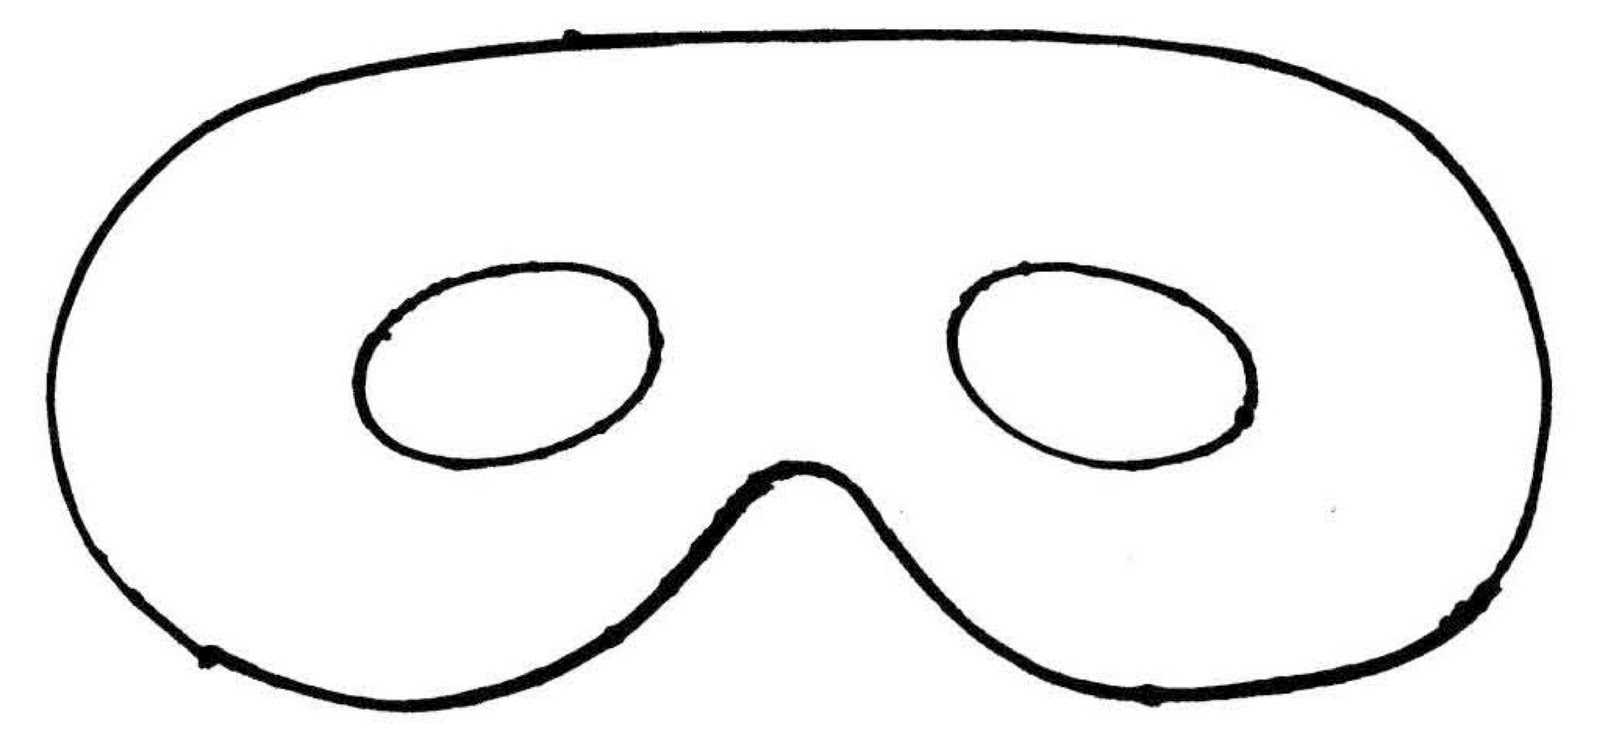 sleep-eye-mask-template-diy-eye-mask-sewing-crafts-tutorials-diy